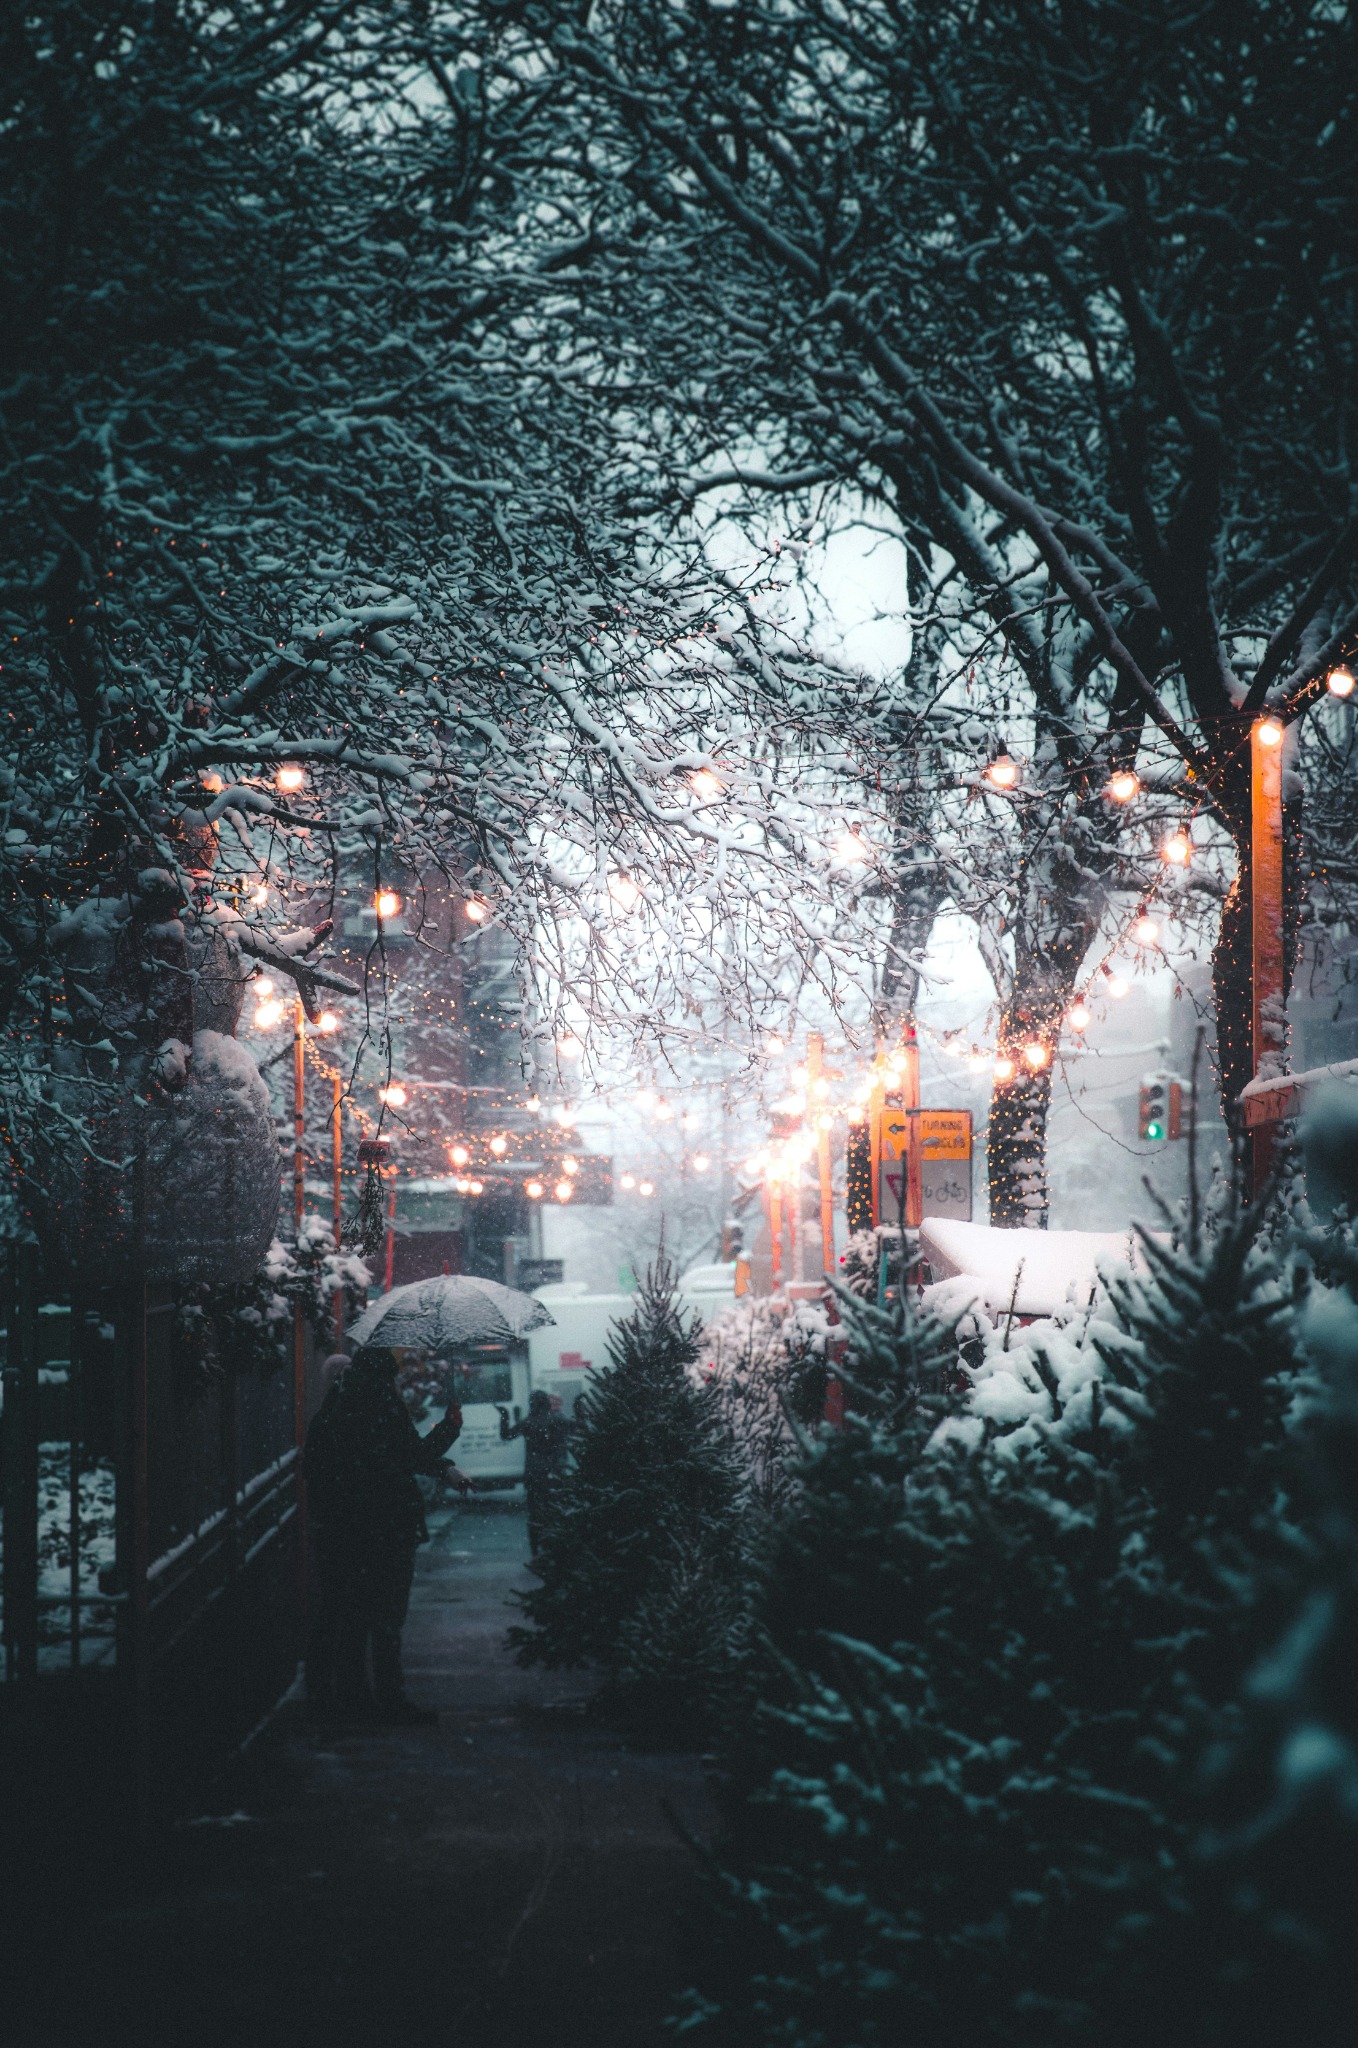 Snowy street festive lights umbrella